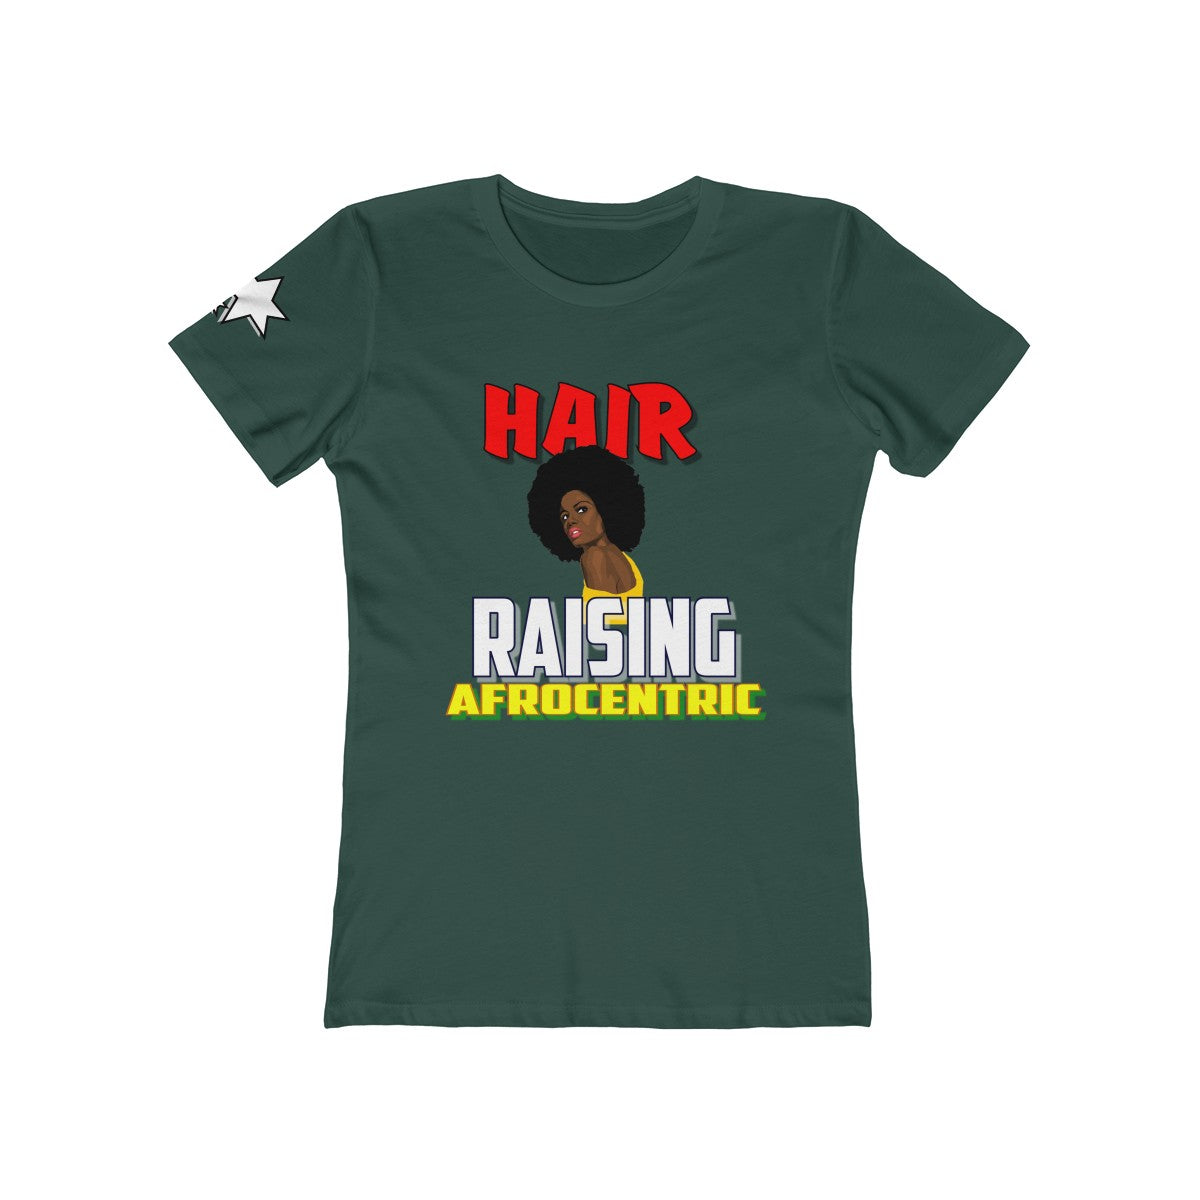 Women's The Boyfriend Tee - Hair Raising Afrocentric  V